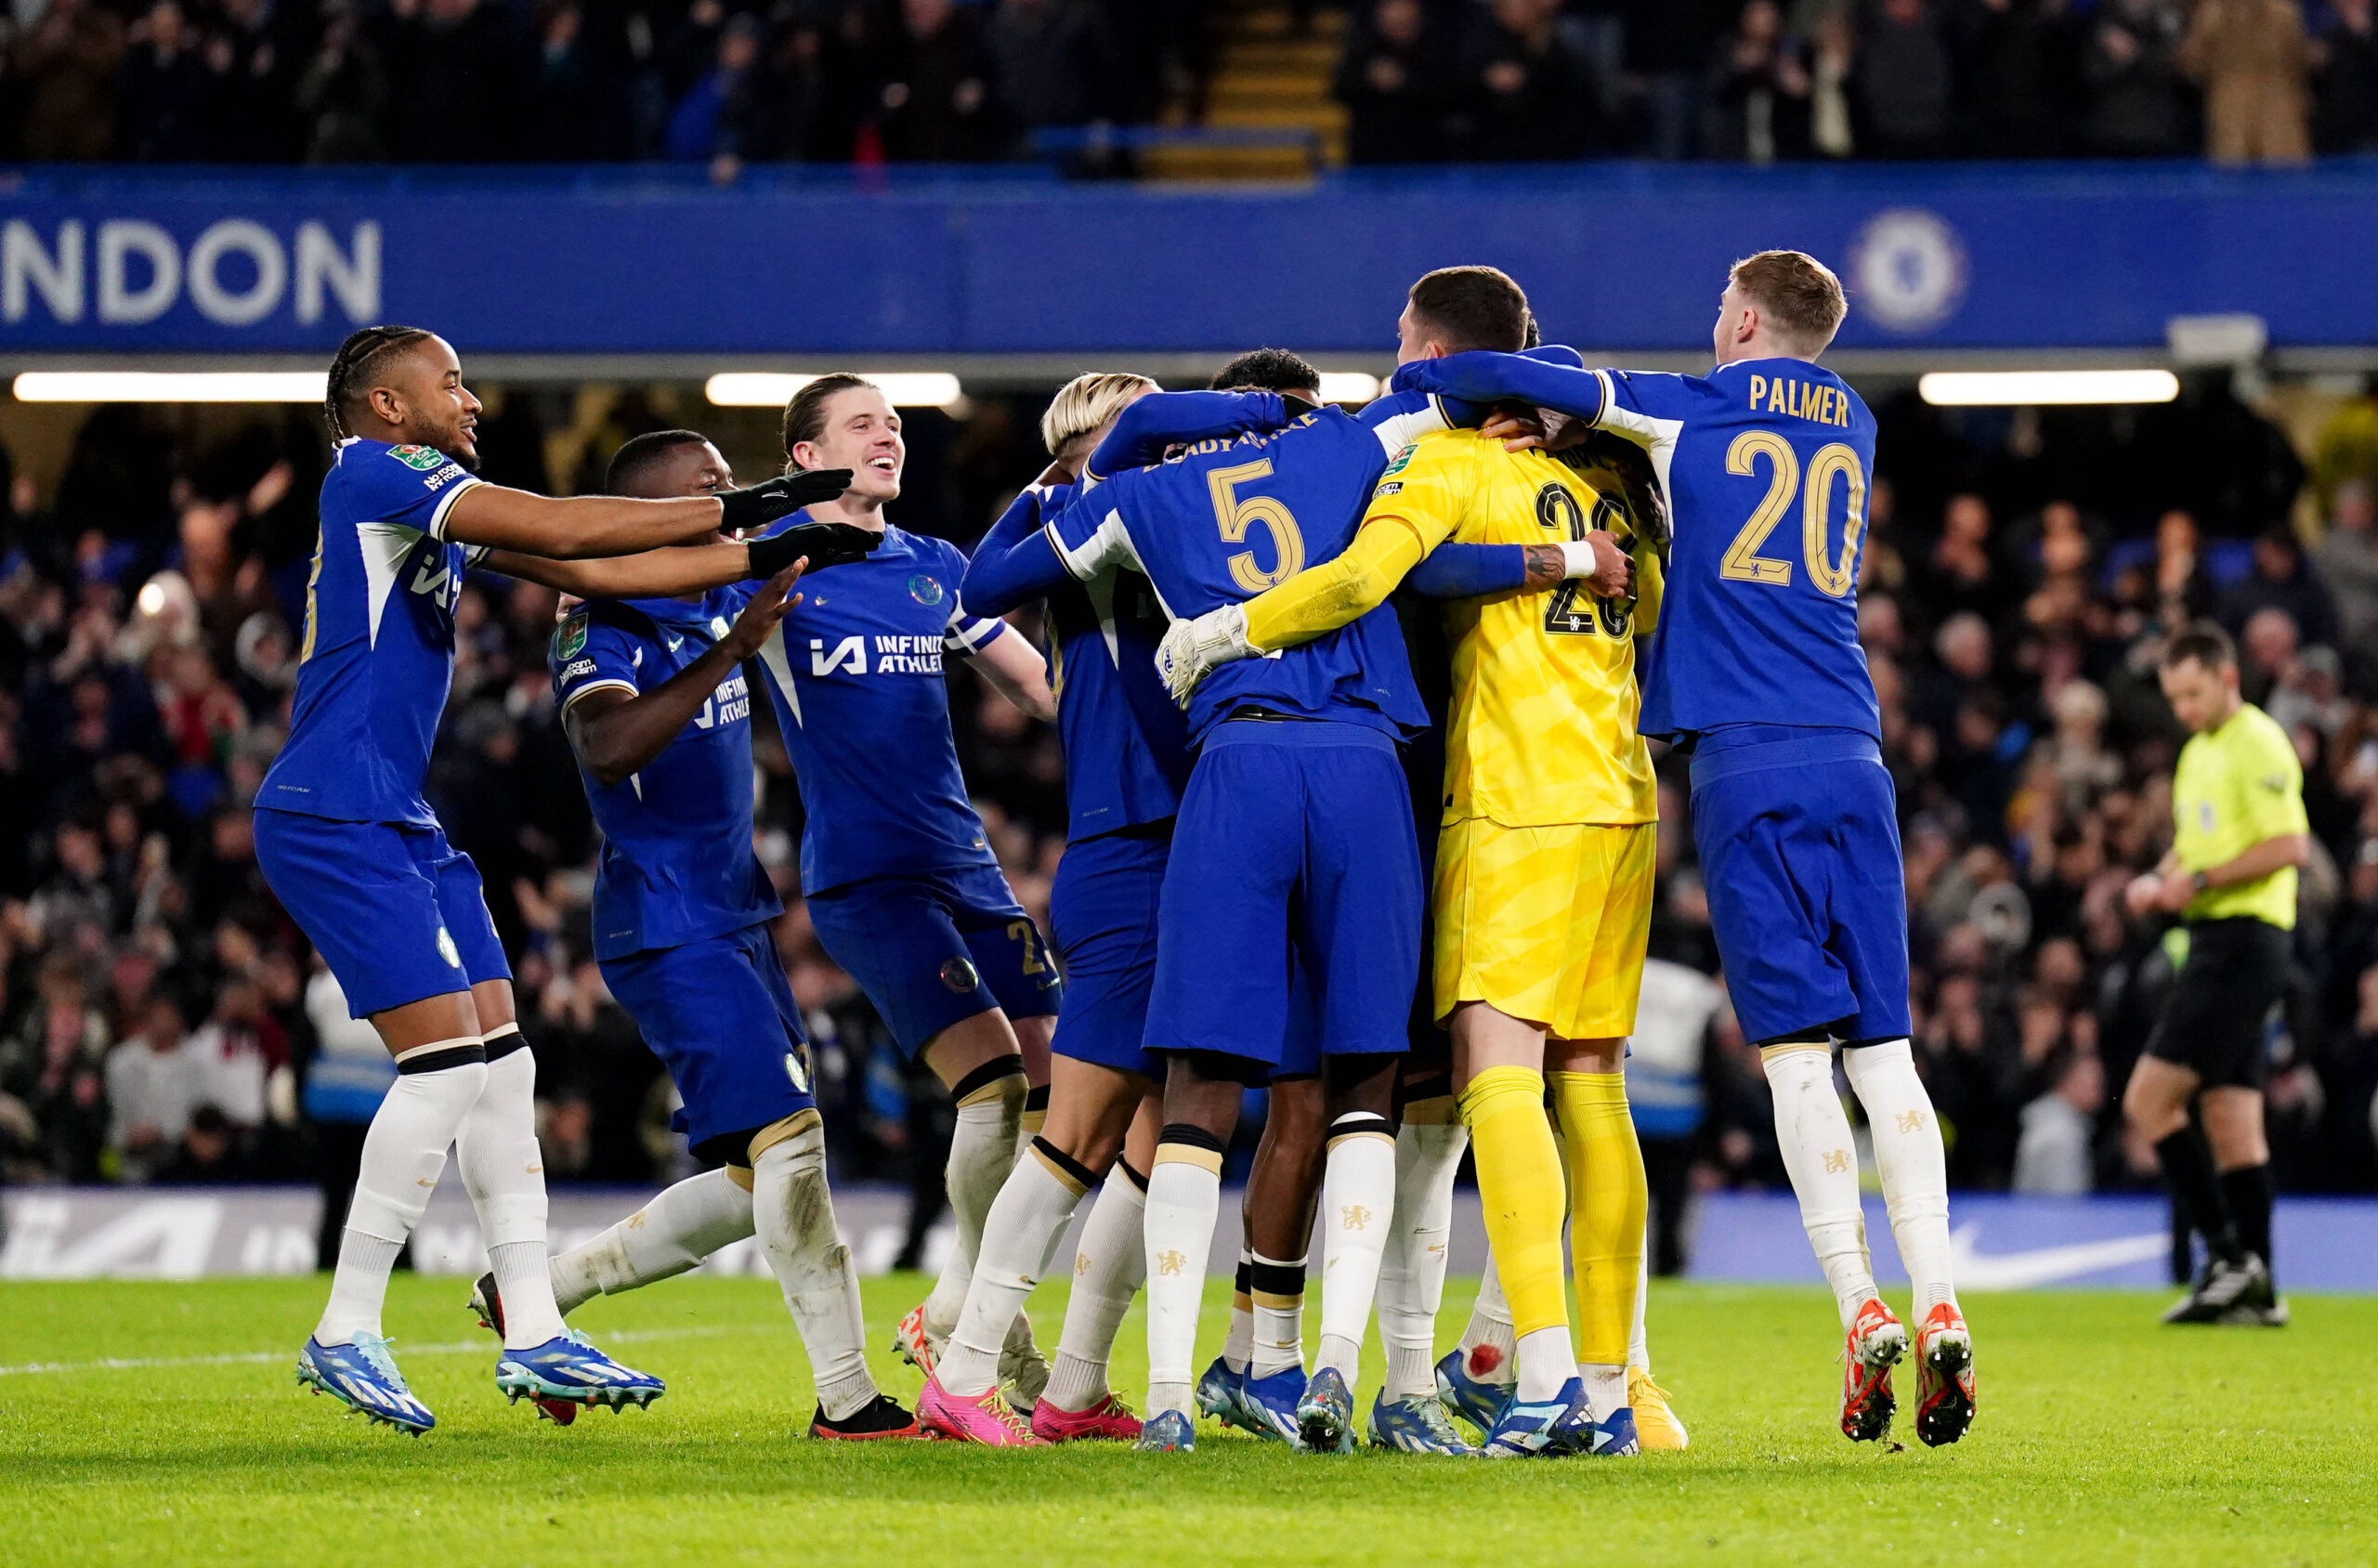 Chelsea players huddle together in celebration